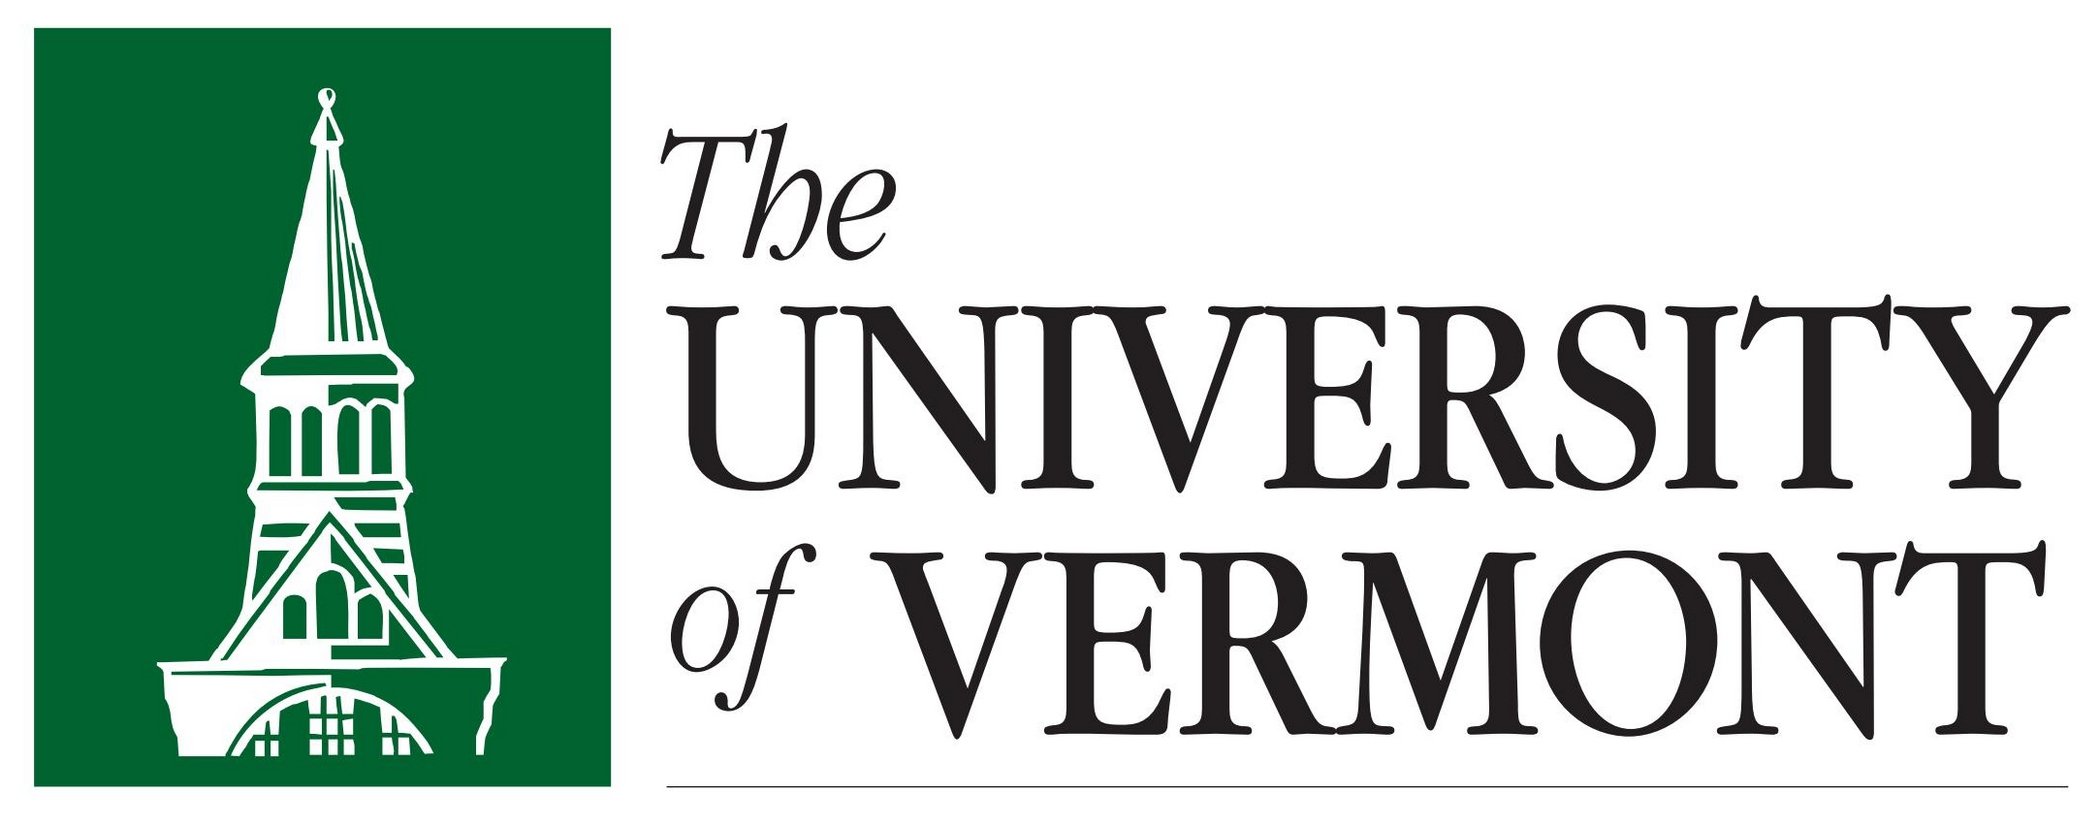 eaafb-images_uwm-university-of-vermont-logo.jpeg